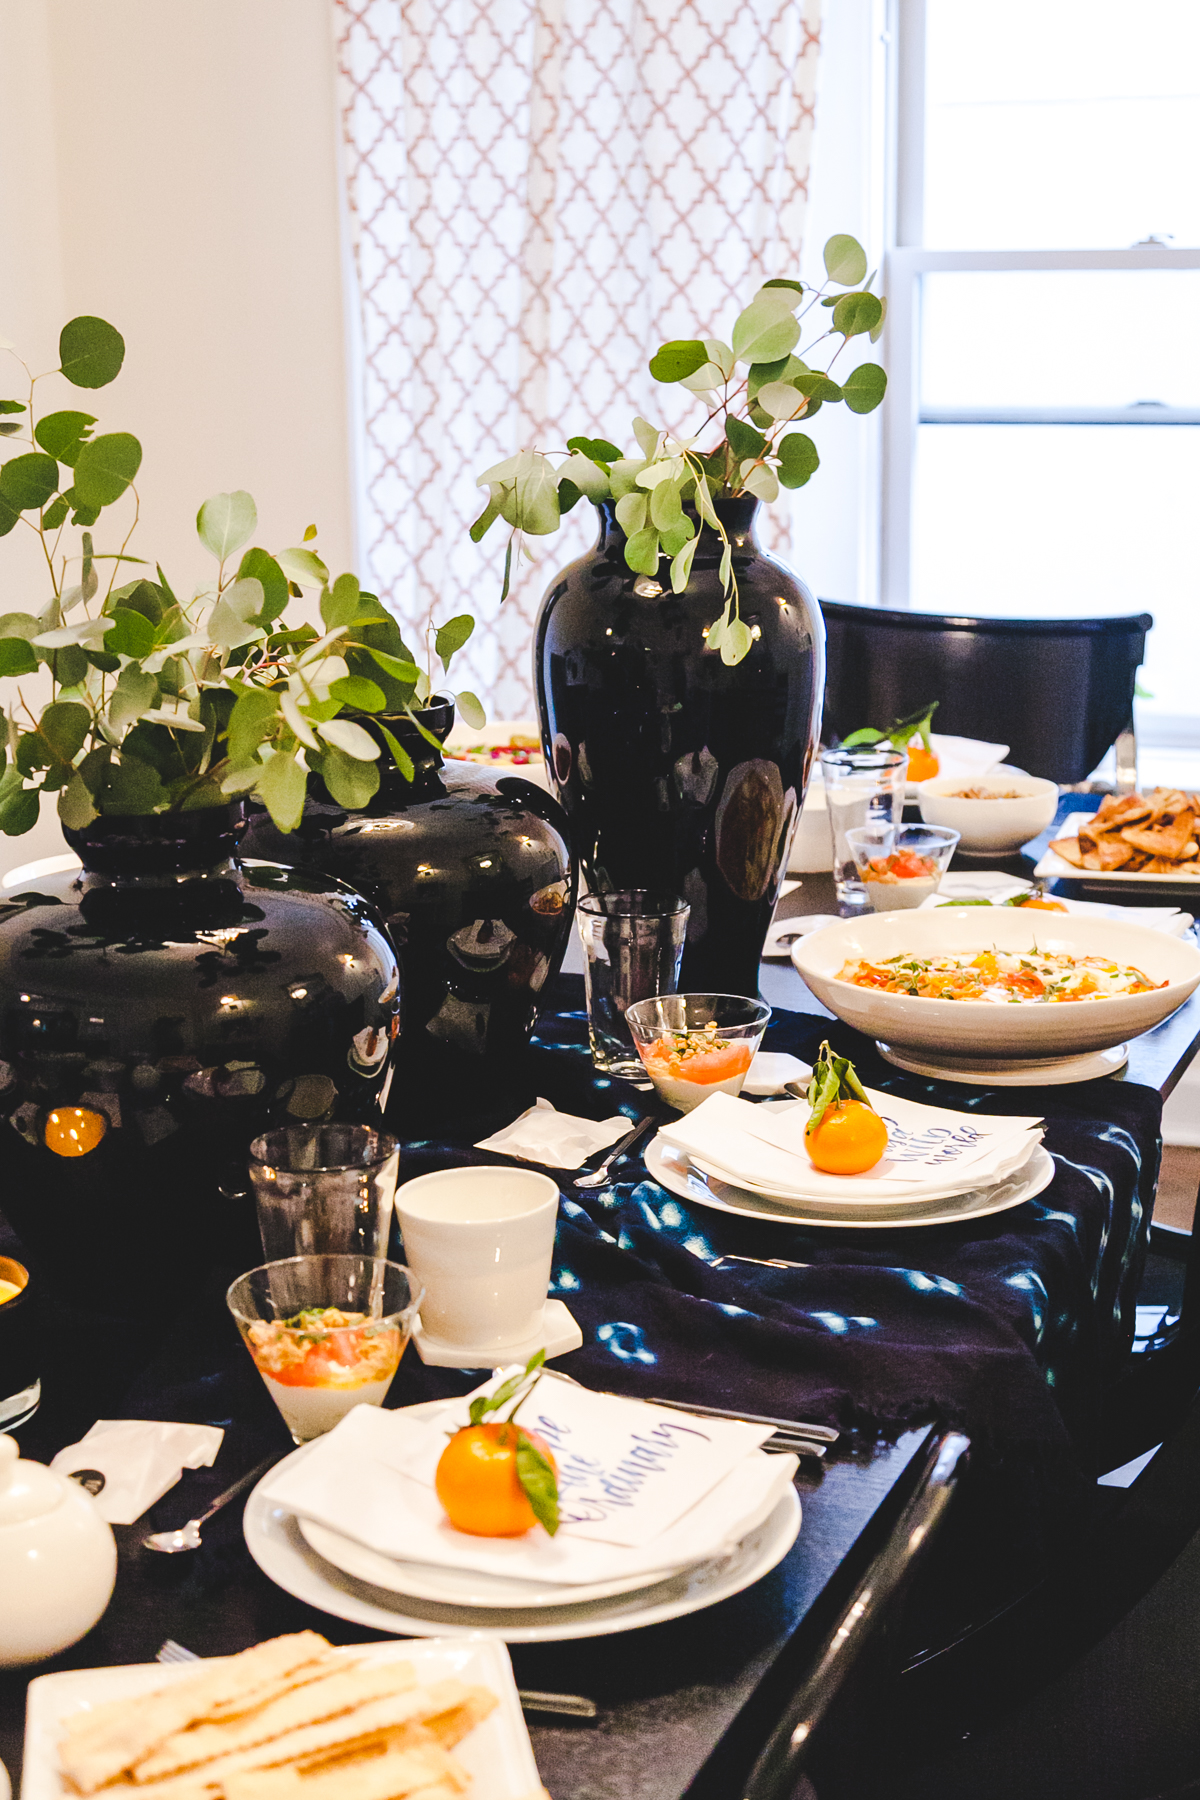 NoMad Luxuries hosts a blogger brunch inspired Mediterranean menu for networking in chicago